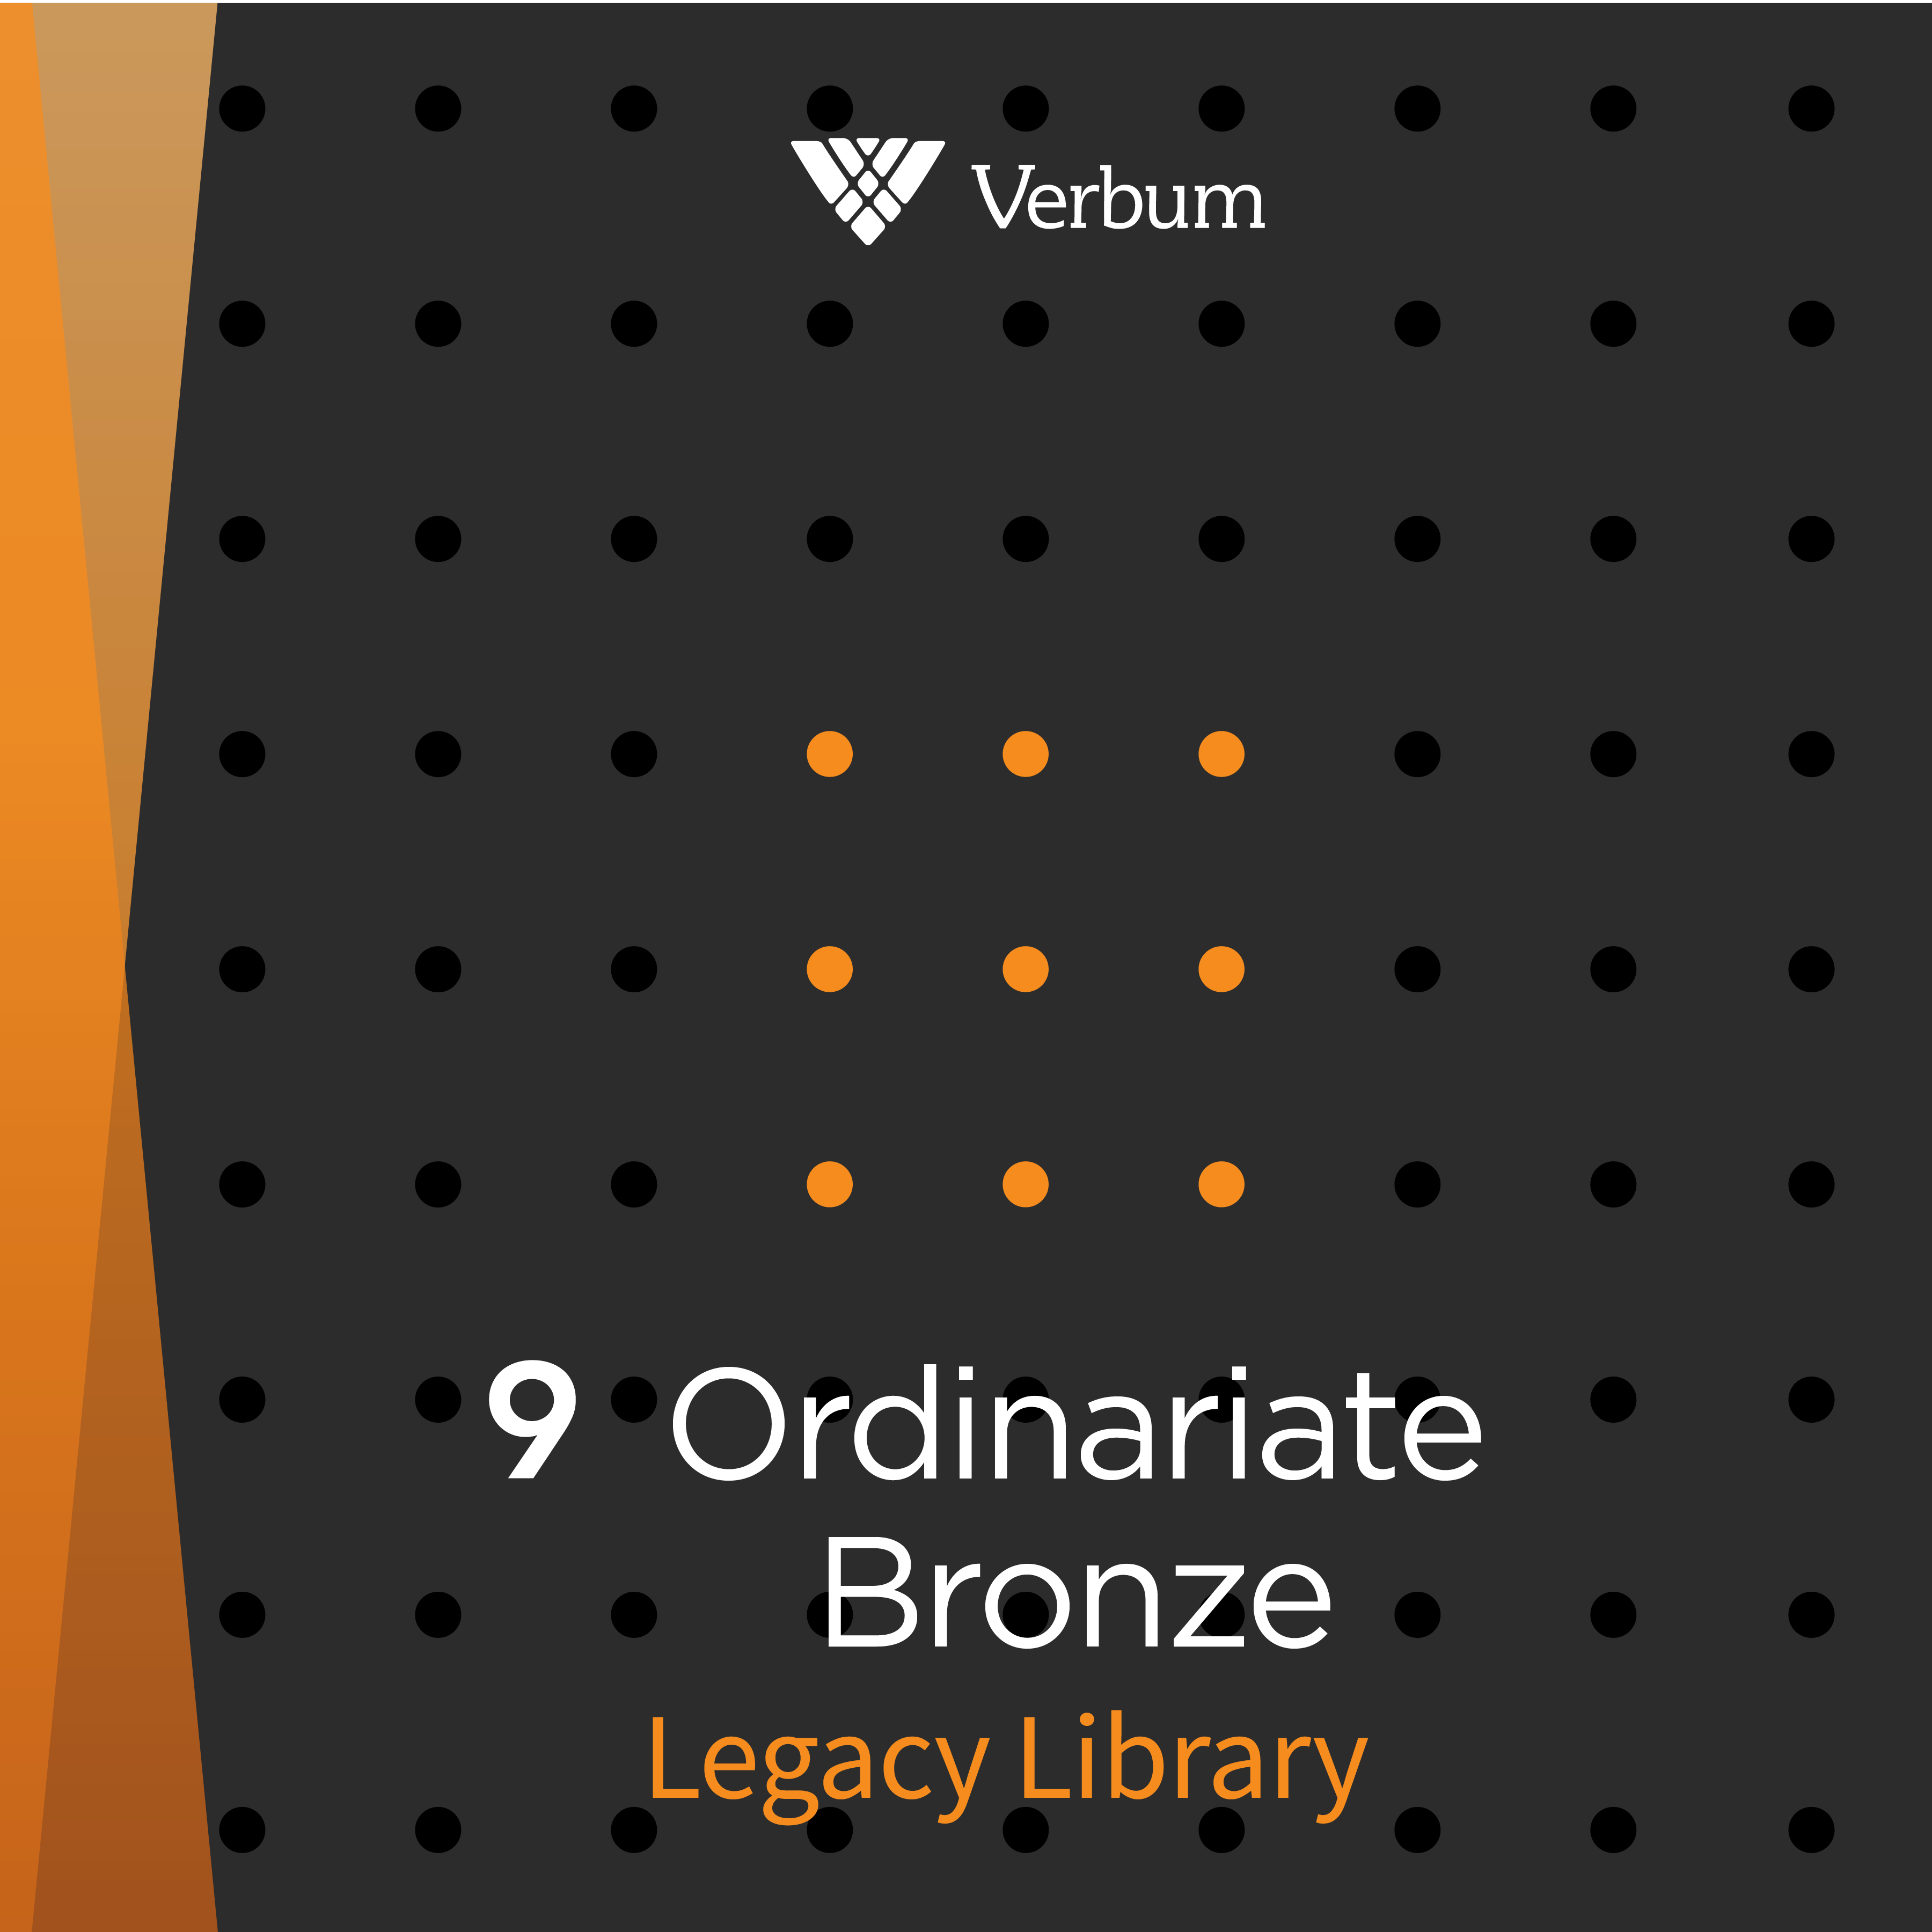 Verbum 9 Ordinariate Bronze Legacy Library